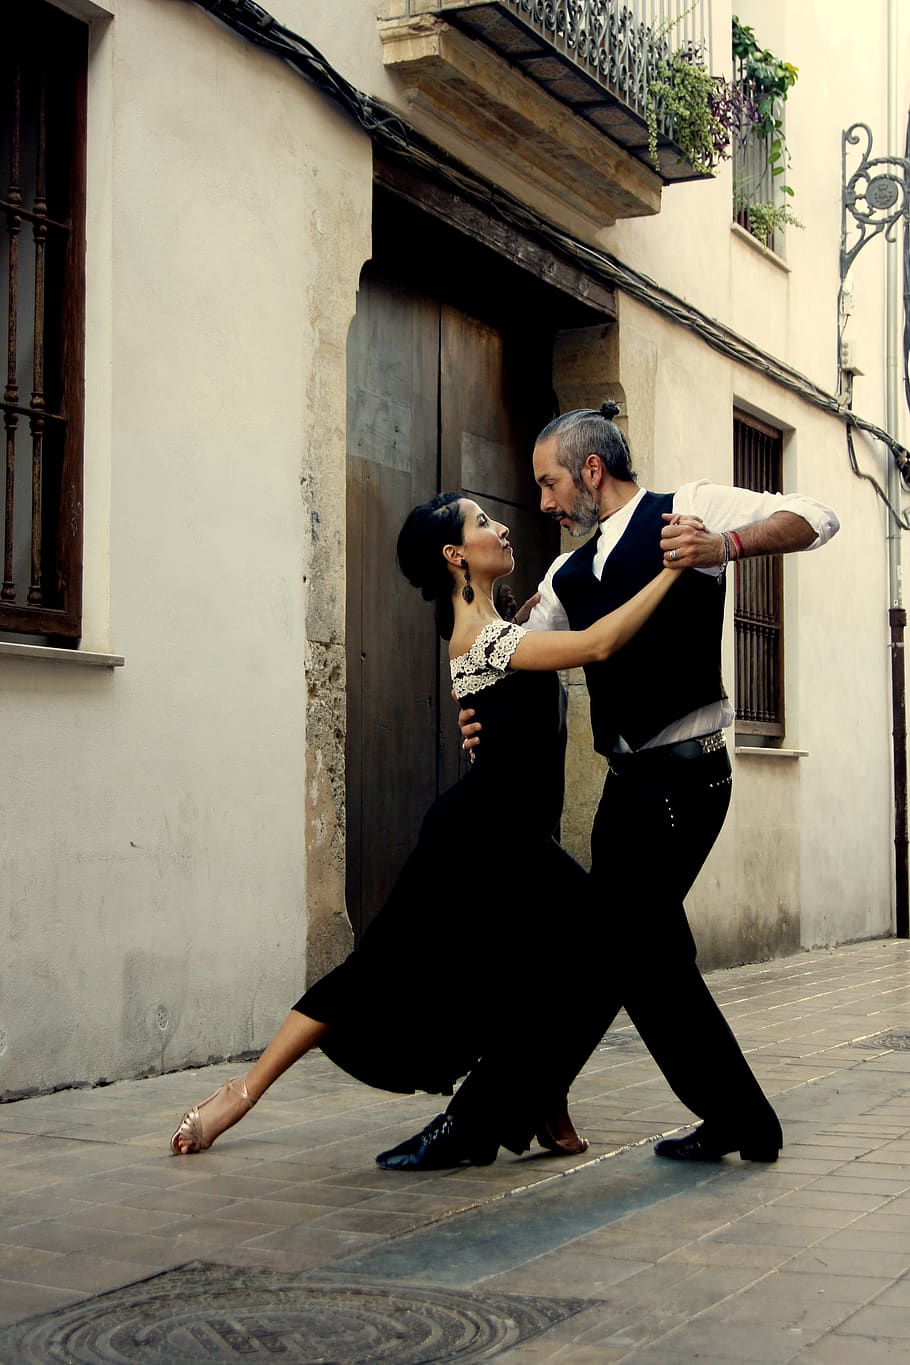 tango, pareja, bailarina, bailarines, romance, integral, personas reales, dos personas, arquitectura, estructura construida